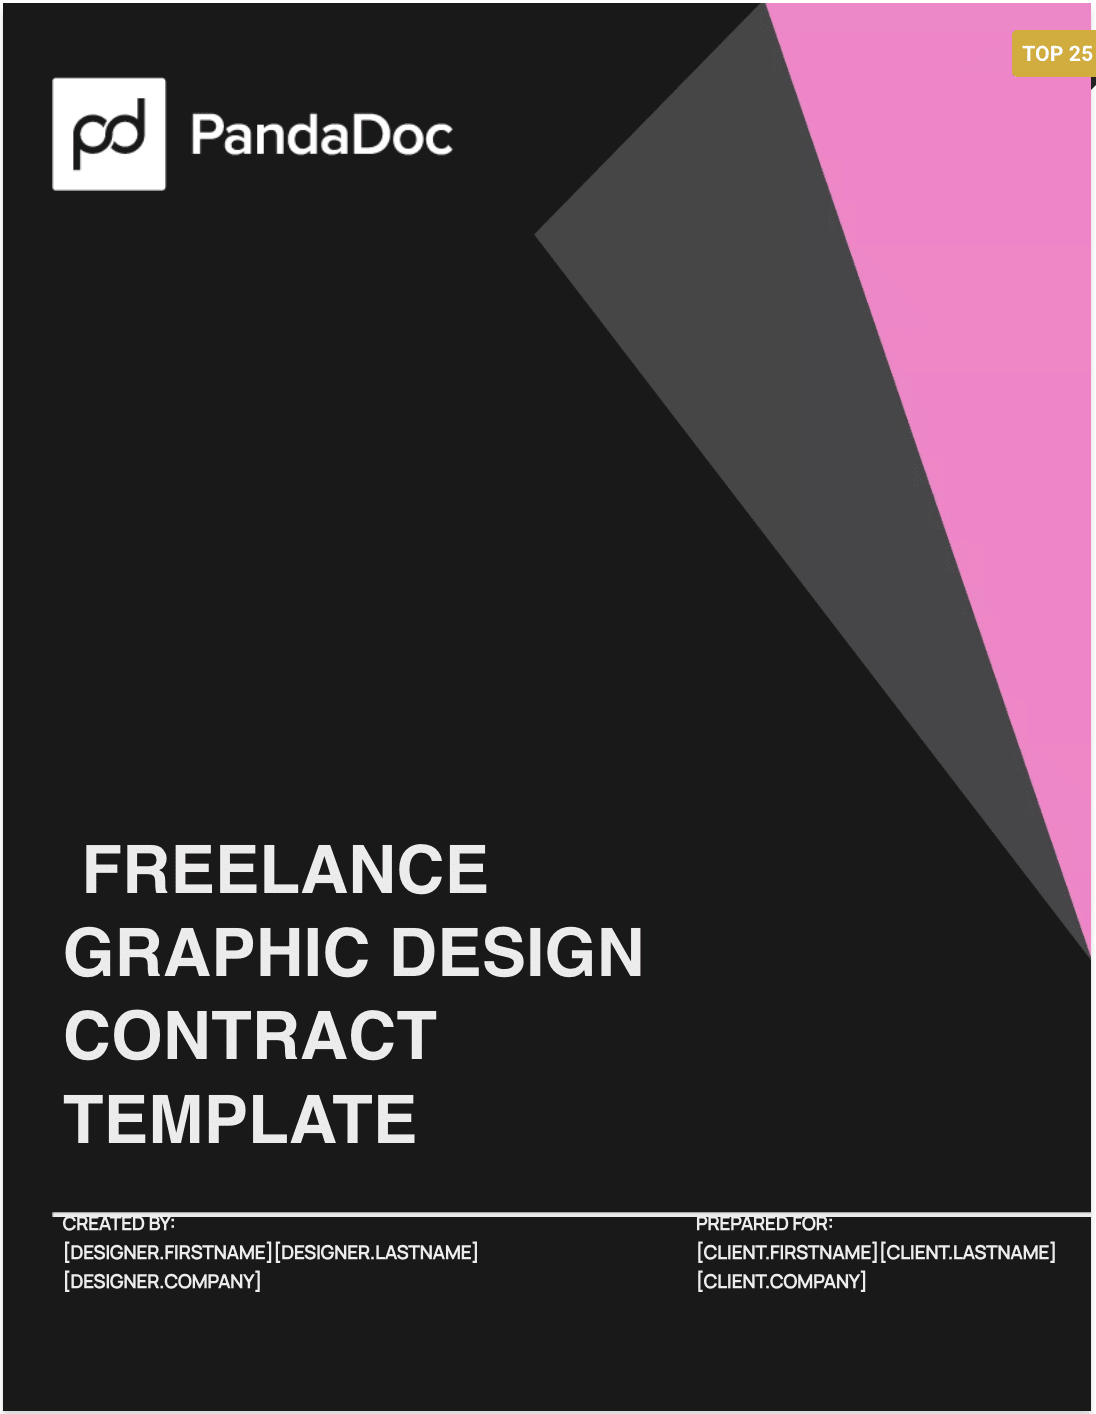 pandadoc graphic design contract template